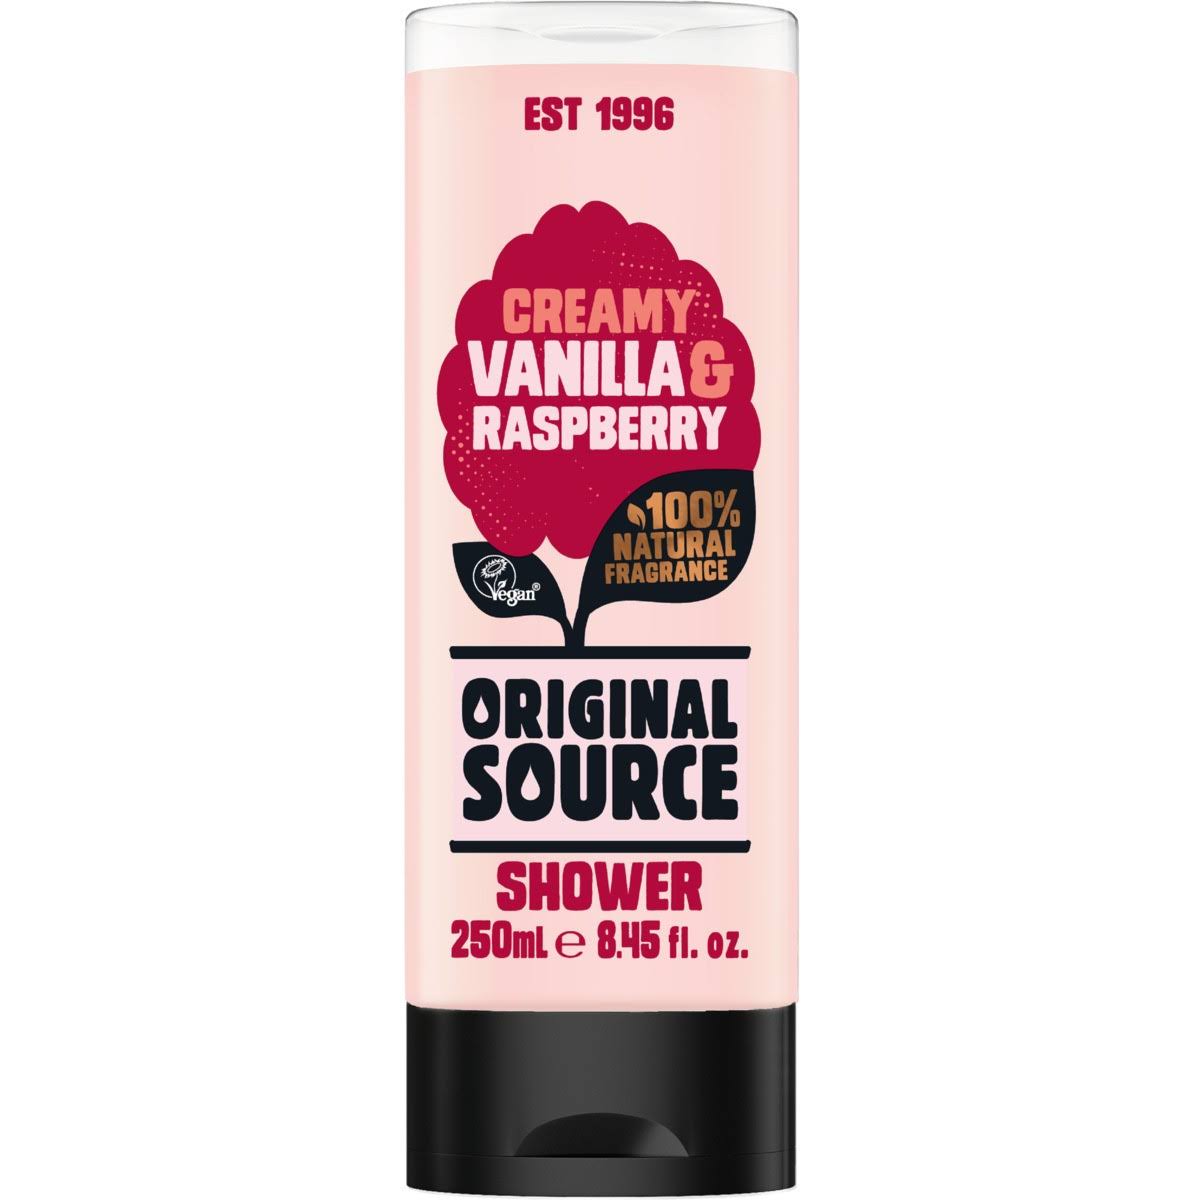 Original Source Creamy Vanilla & Raspberry Shower - 250ml